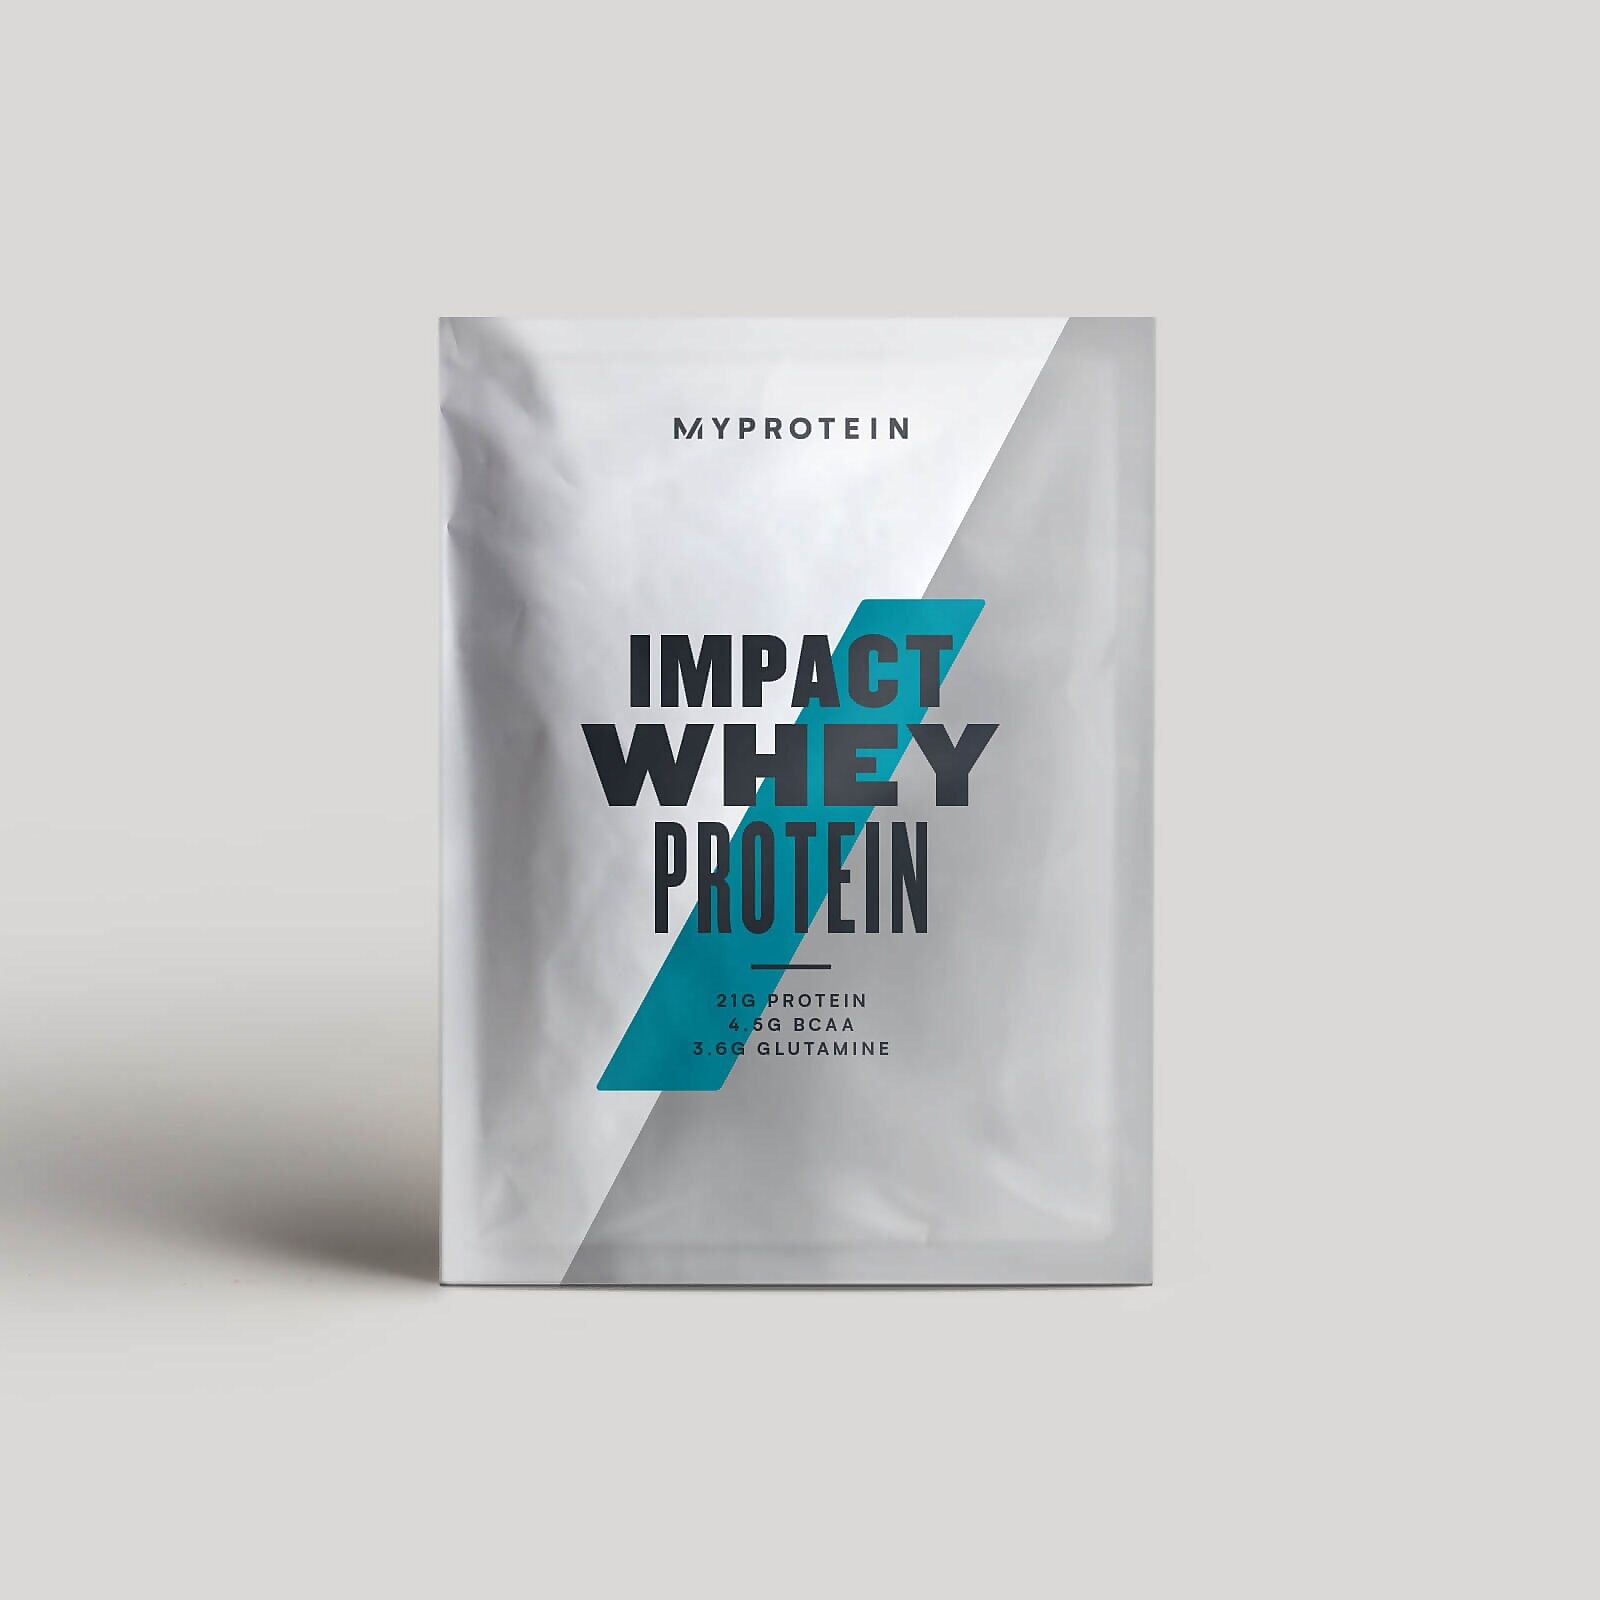 Myprotein Impact Whey Protein (Sample) - 25g - White Chocolate